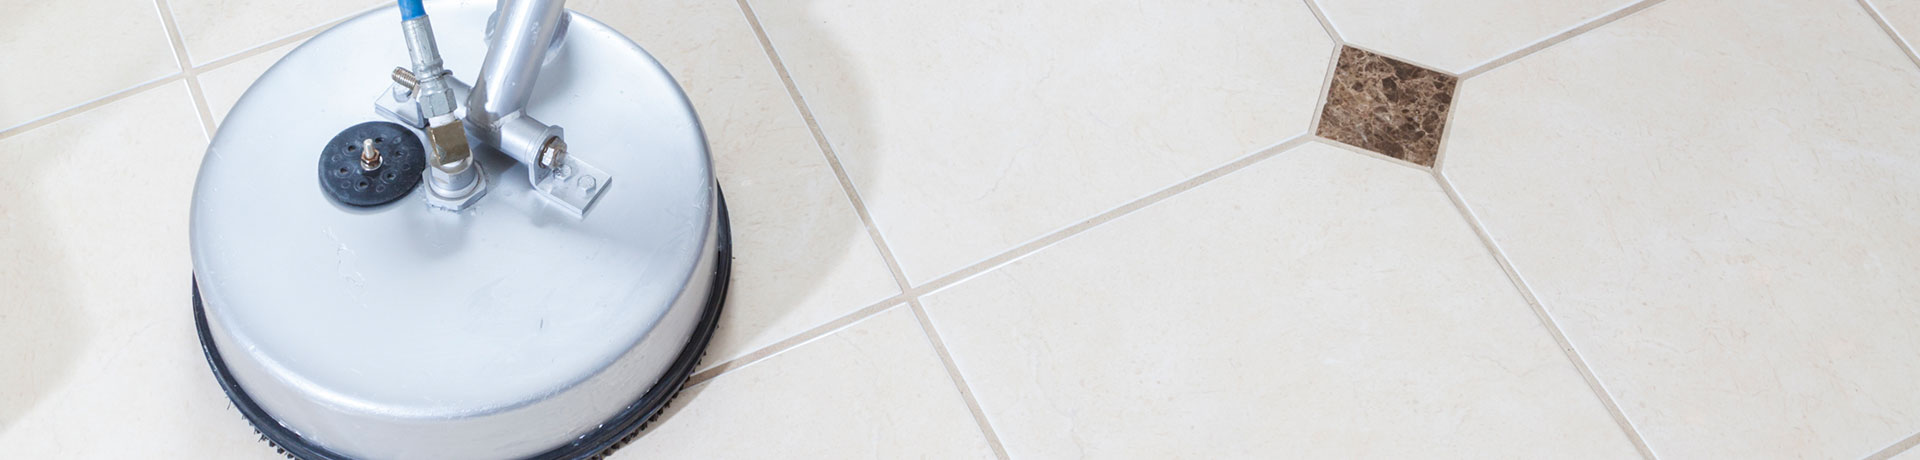 Commercial tile cleaner machine on tile floor in restroom